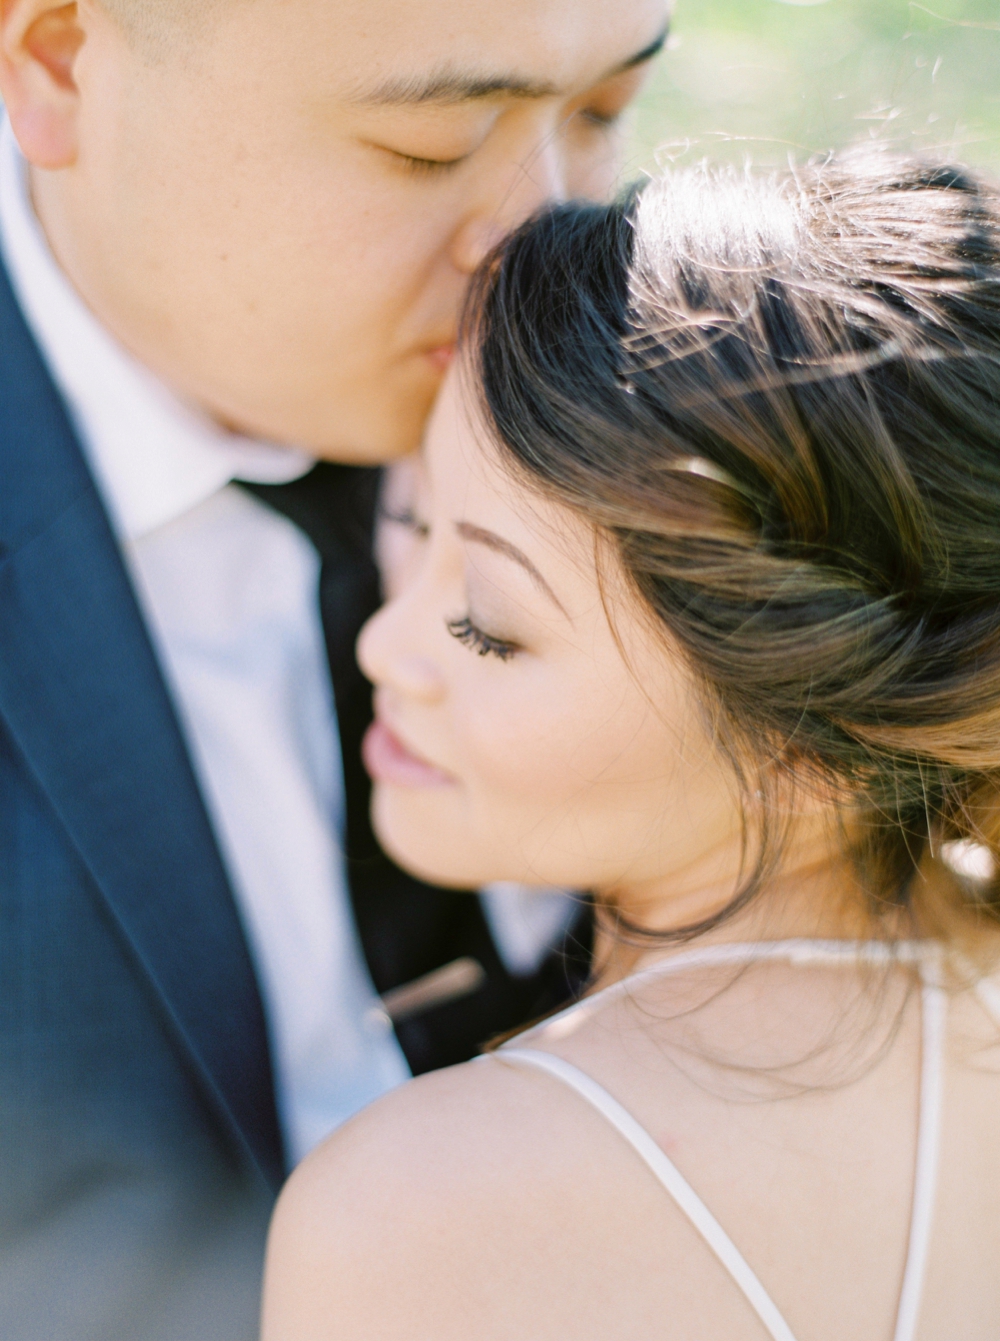 Bride and groom portraits | BHLDN wedding dress | Justine milton fine art wedding photographers | calgary wedding at the lake house